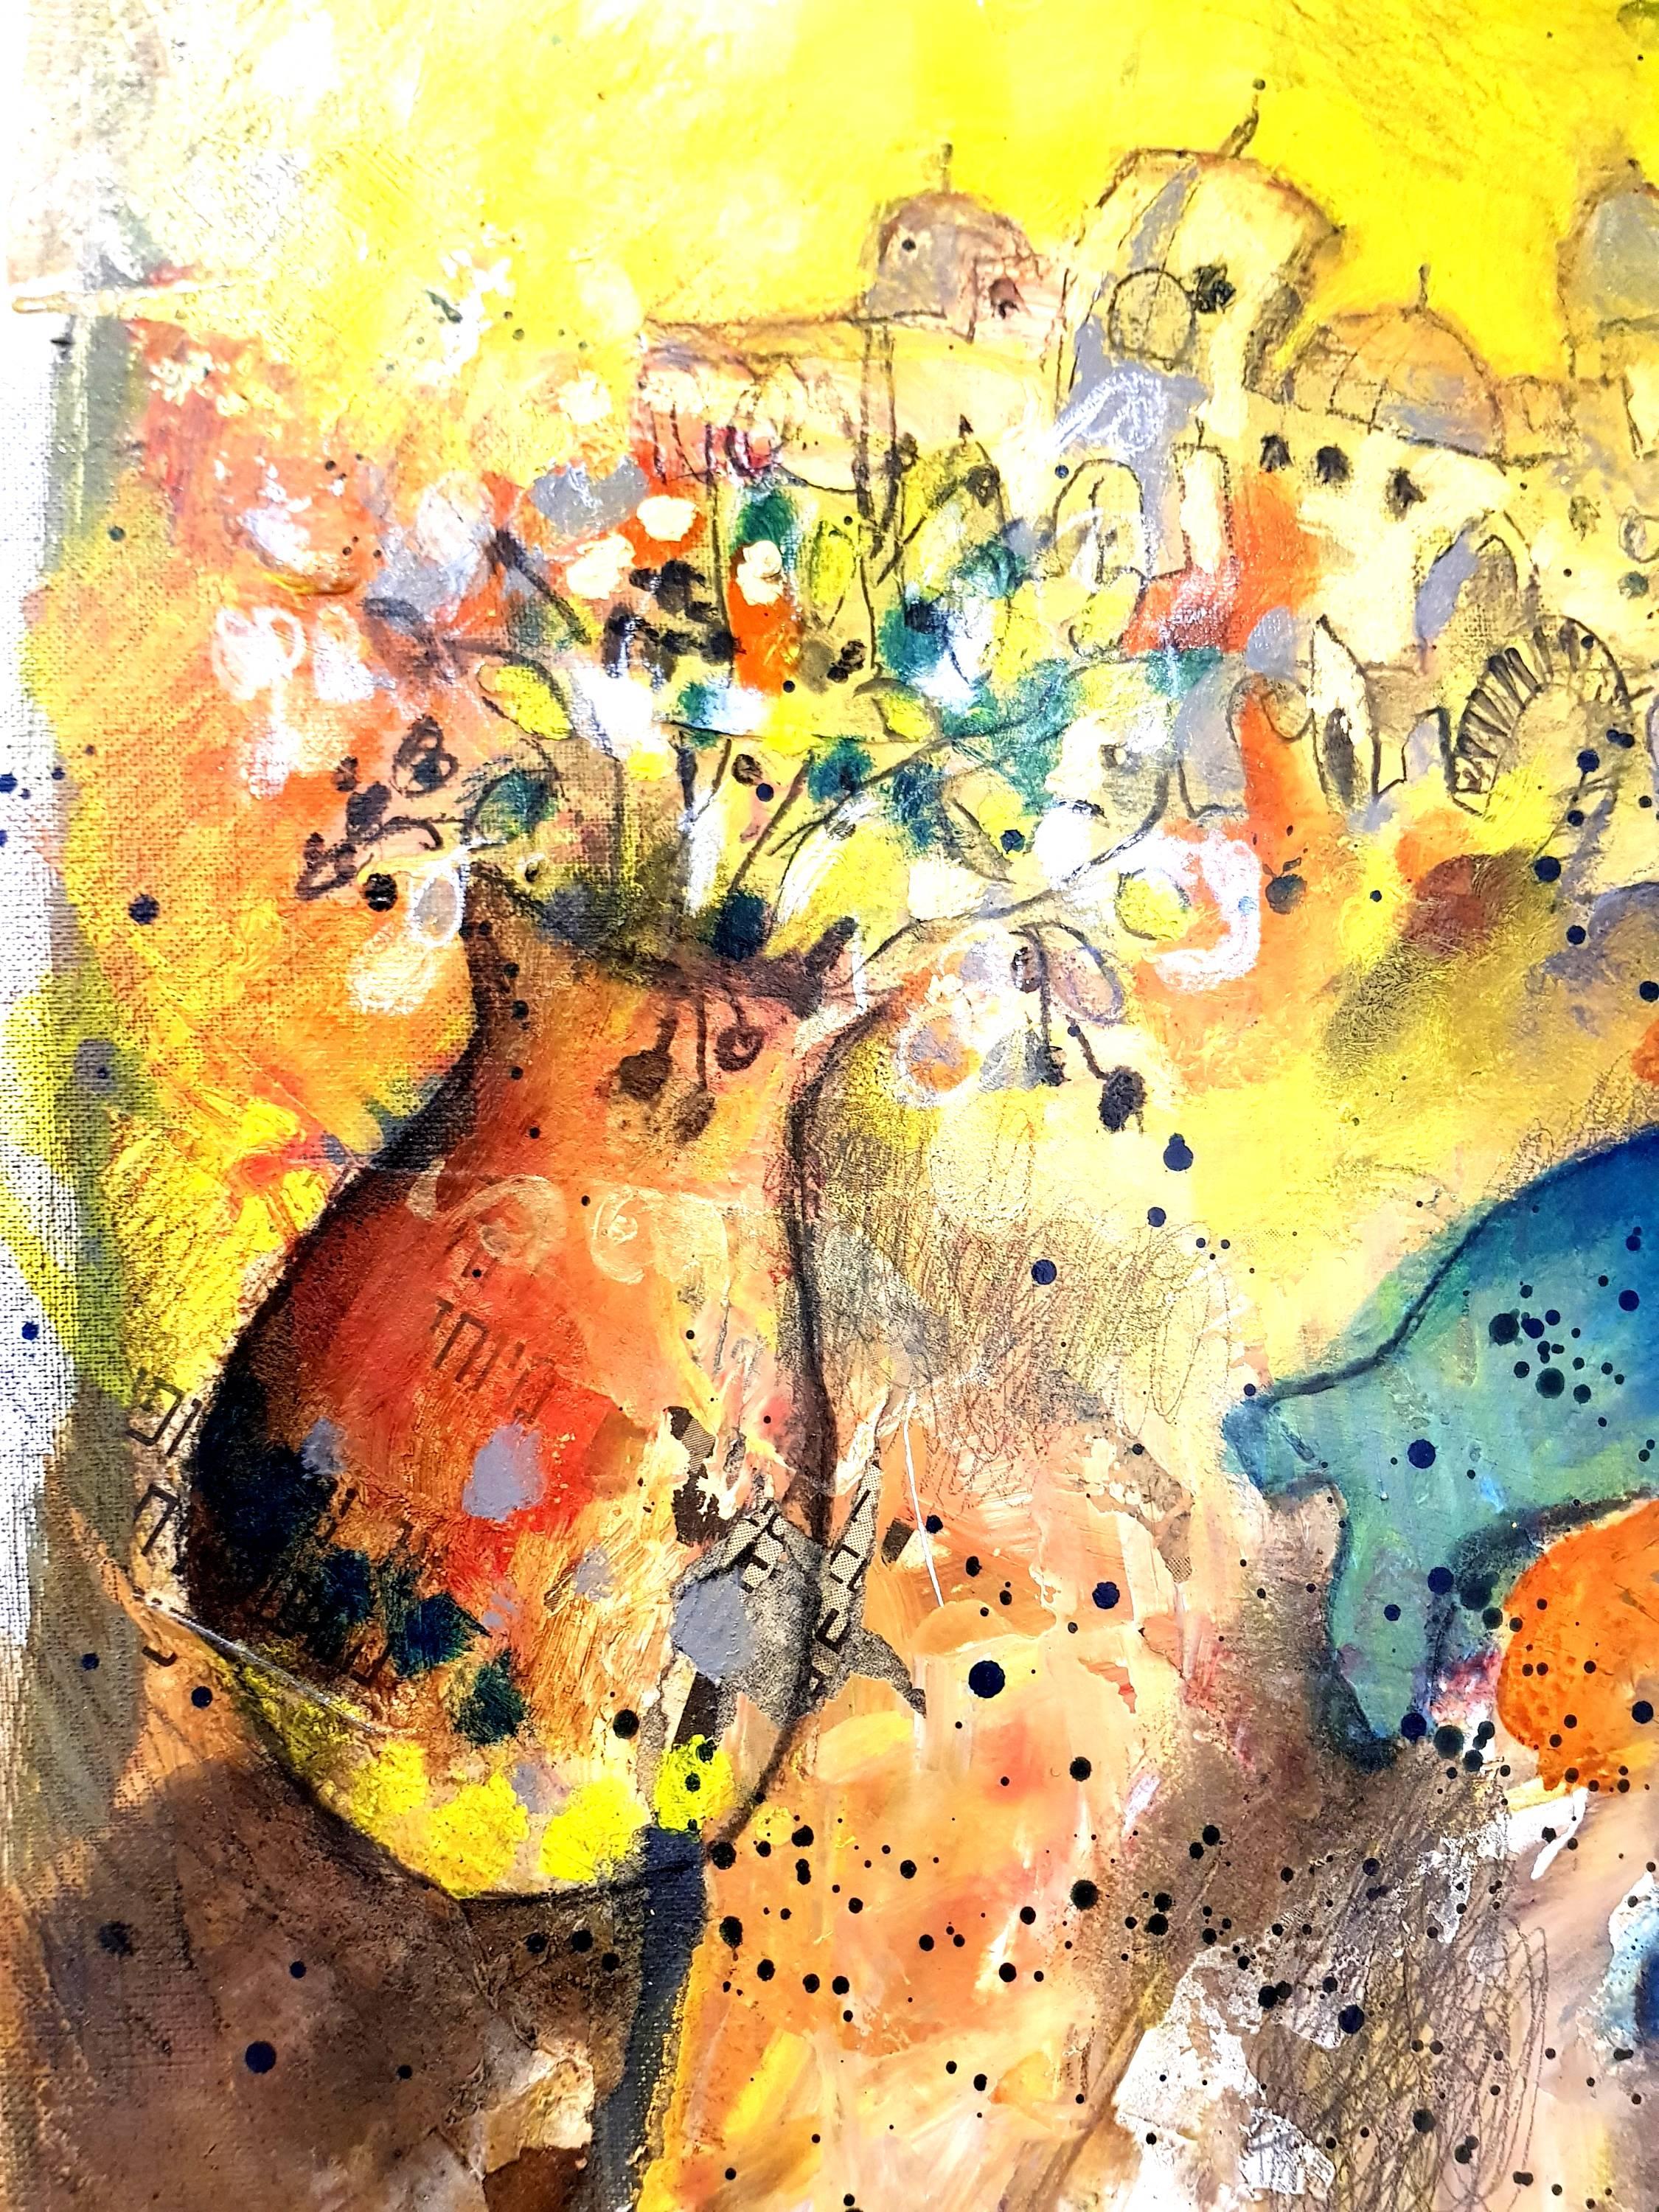 Yoel Benharrouche - Instrument of Happiness - Oil on Canvas 6